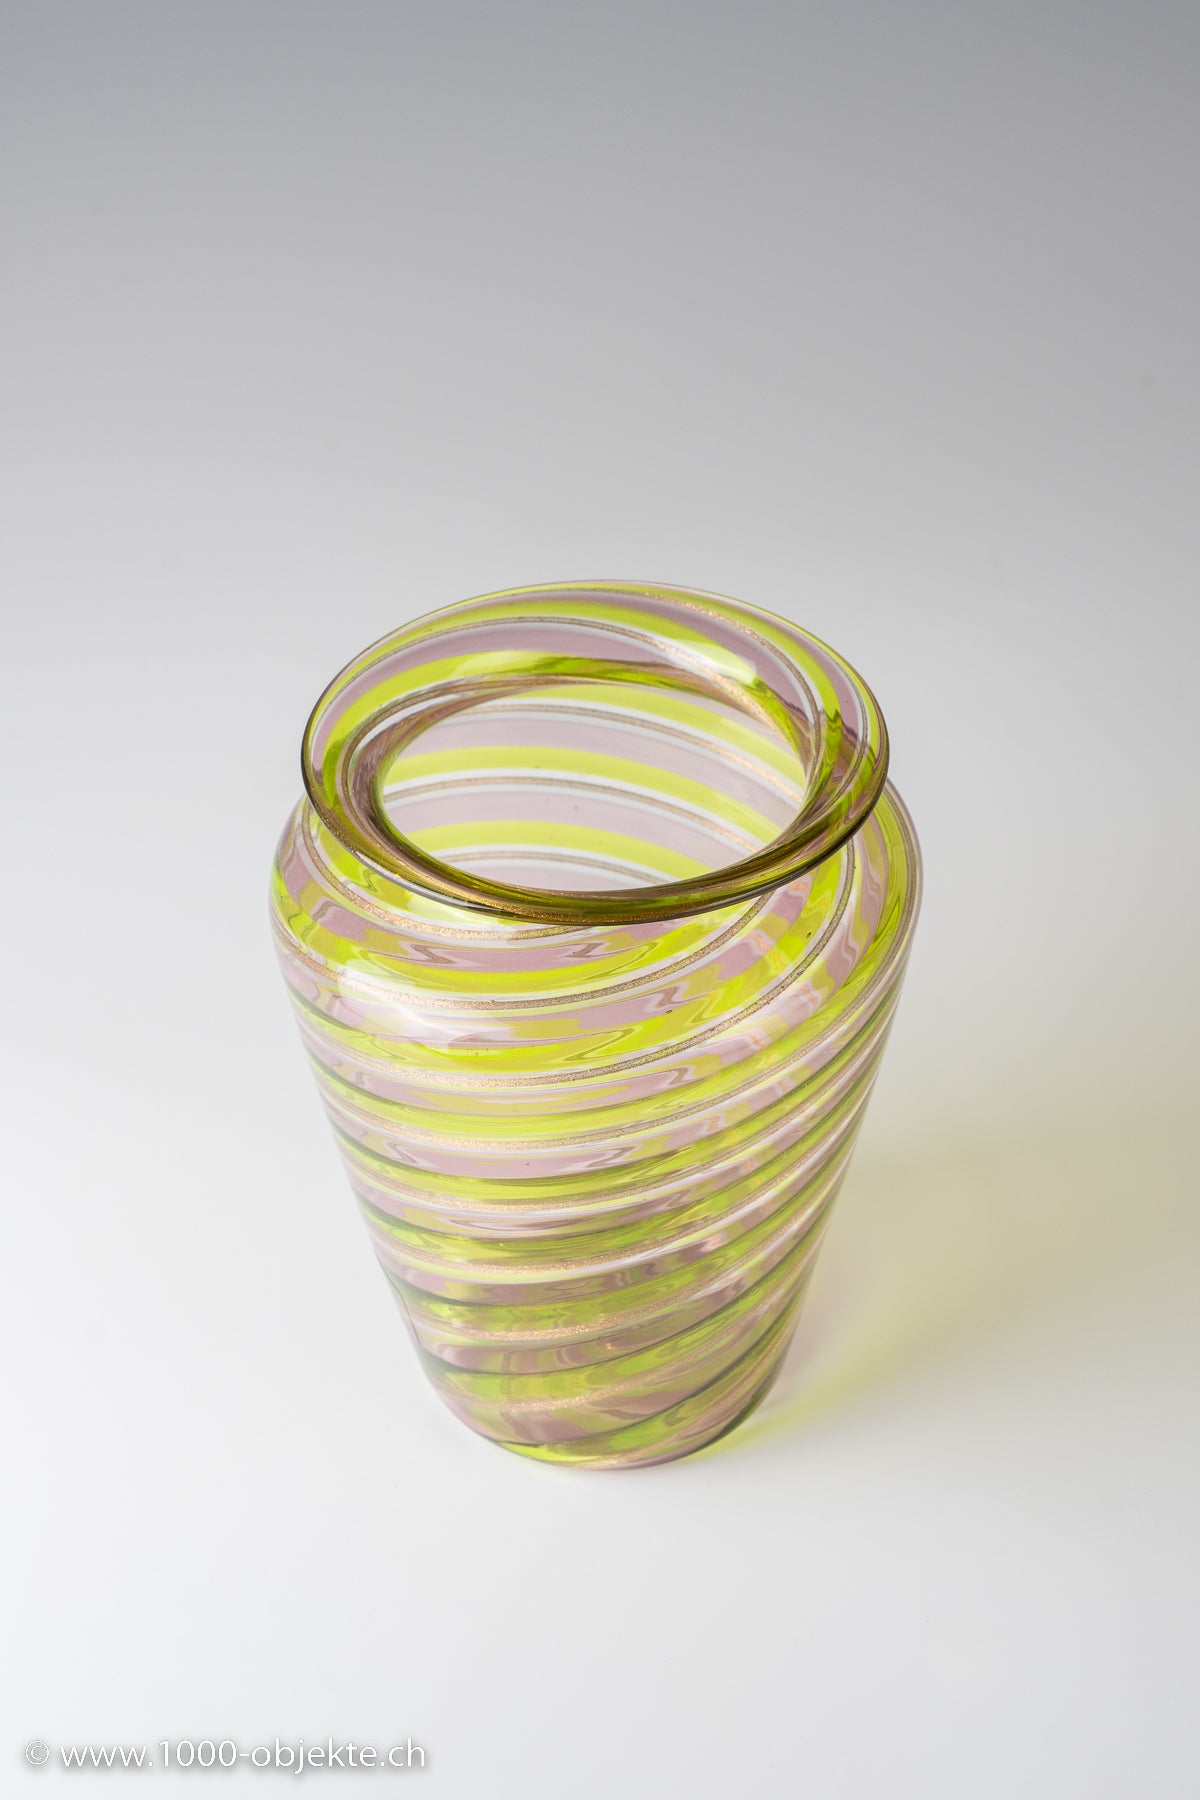 Glass vase Fratelli Toso ca 1978-85 a canne aventurine purple green label